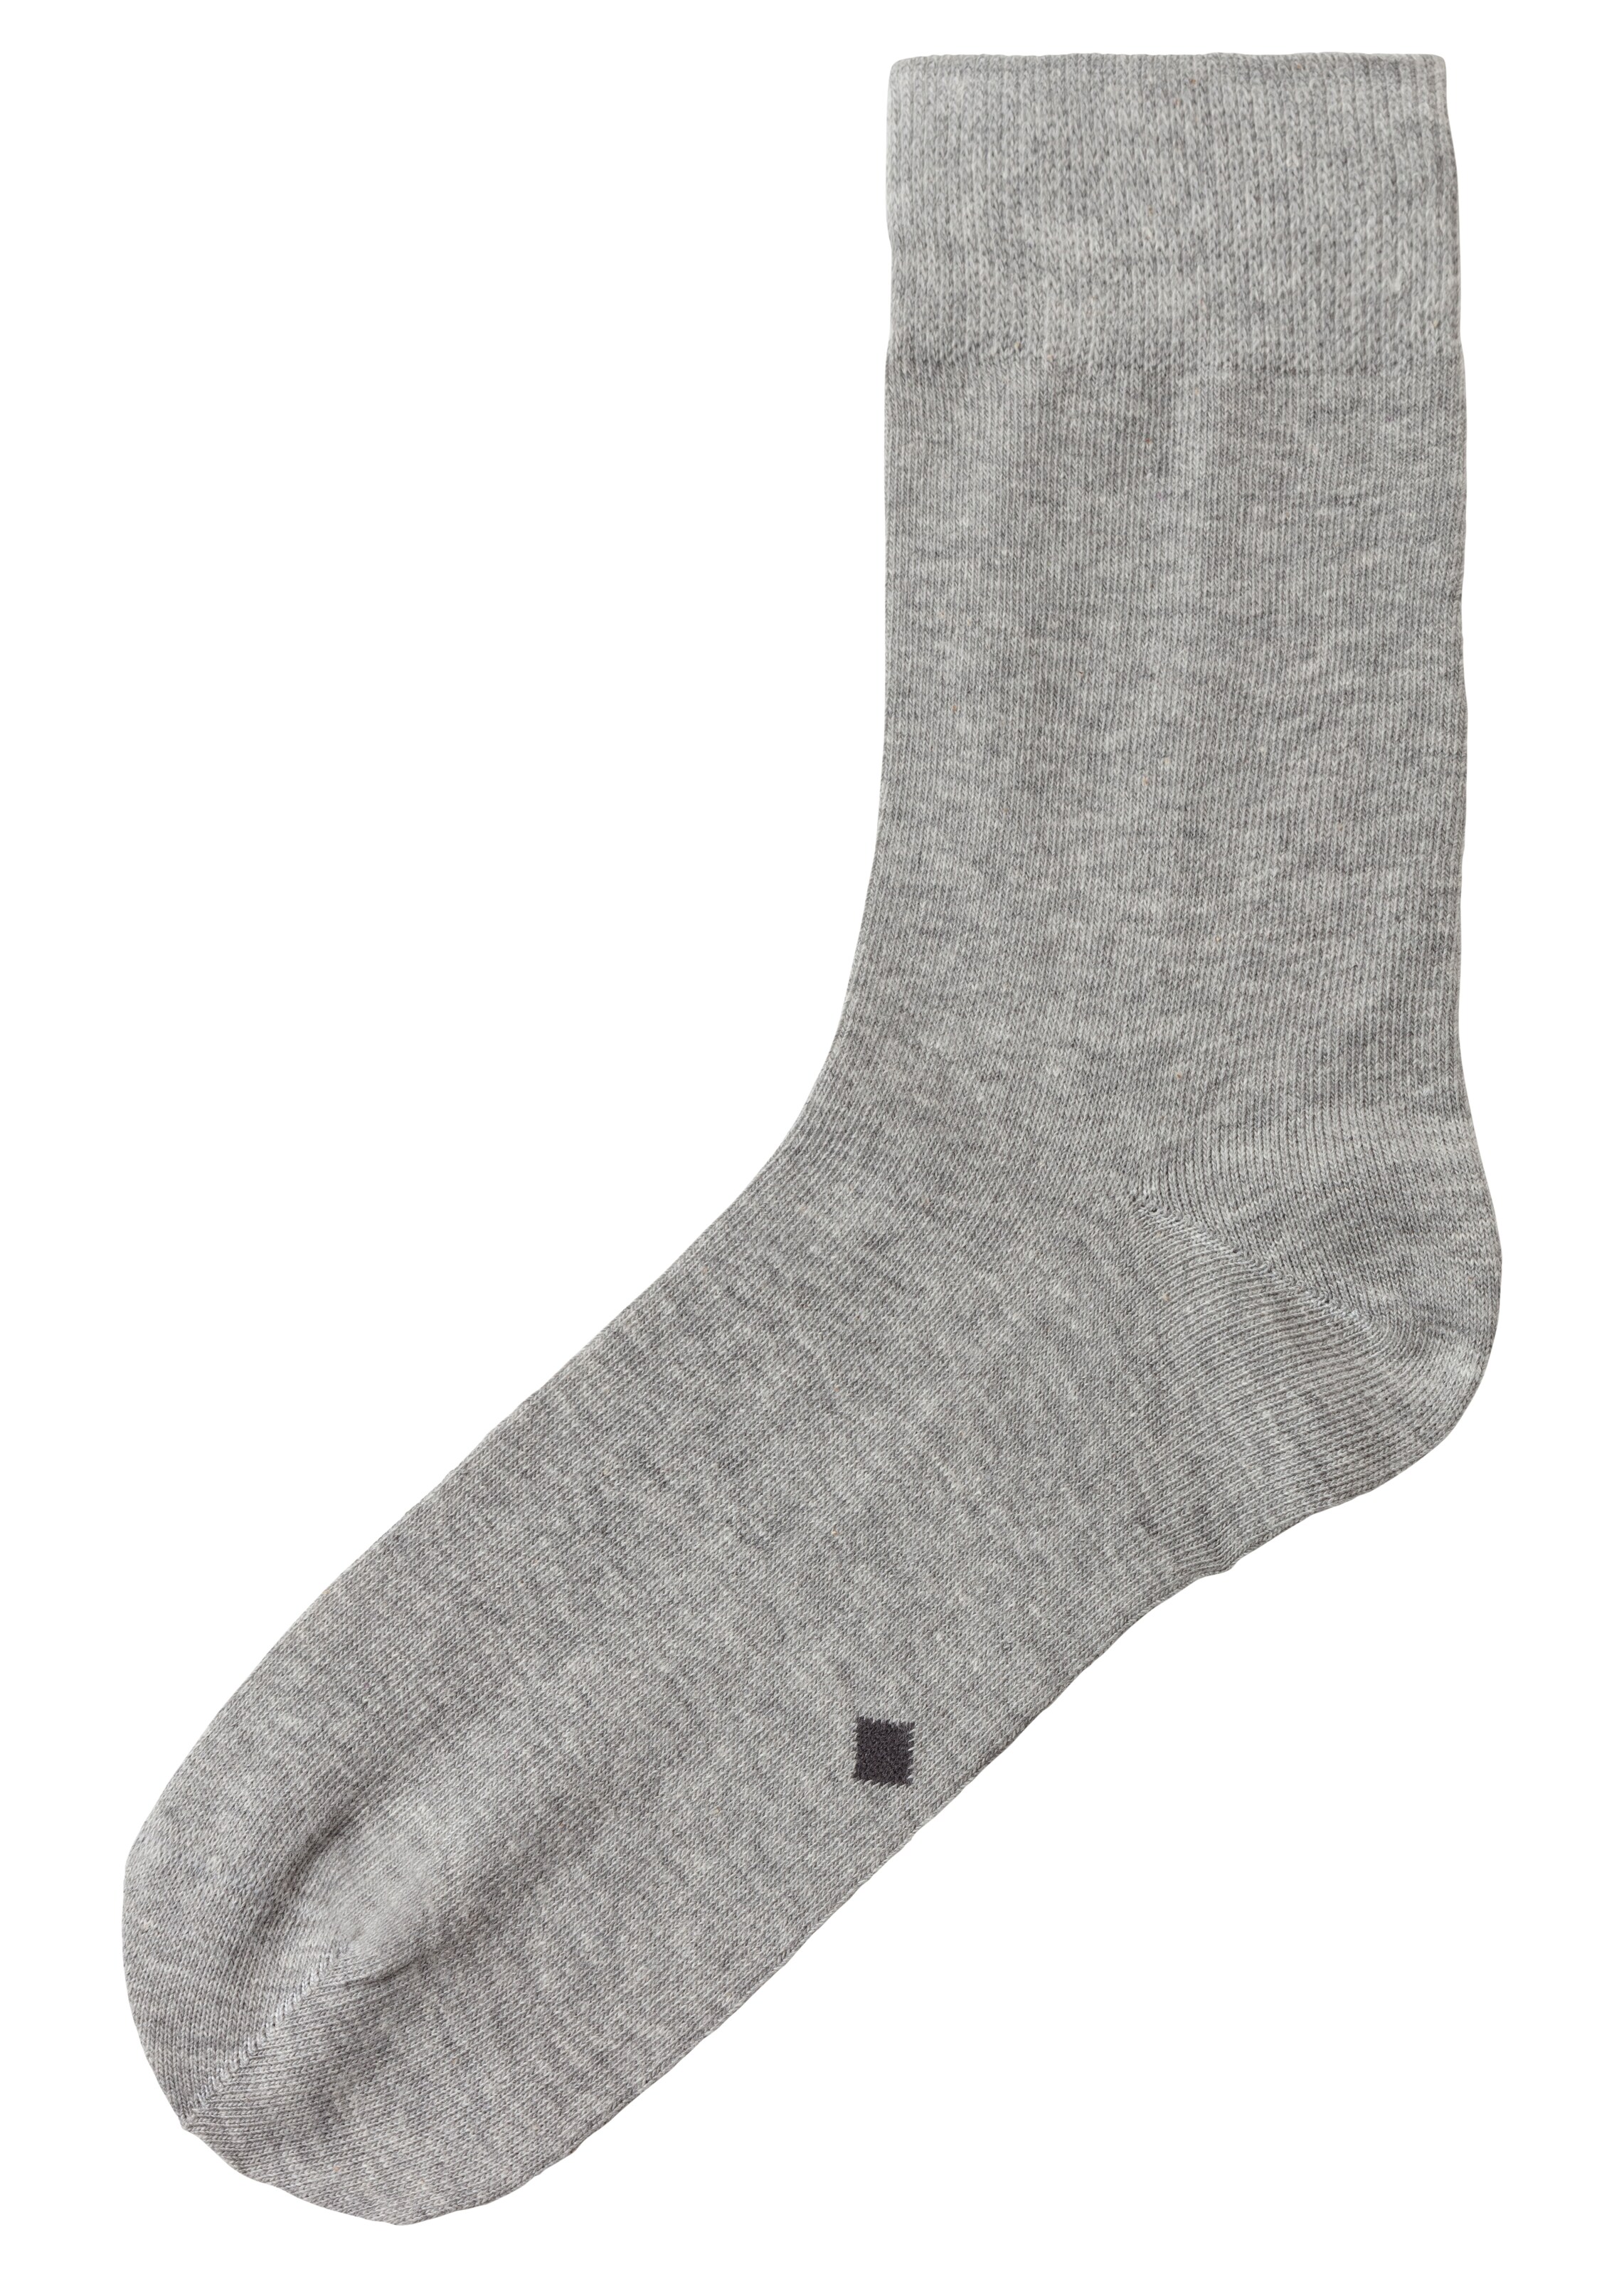 Frauen Wäsche HIS JEANS Socken in Grau, Basaltgrau, Hellgrau, Dunkelgrau, Schwarz - VE82260